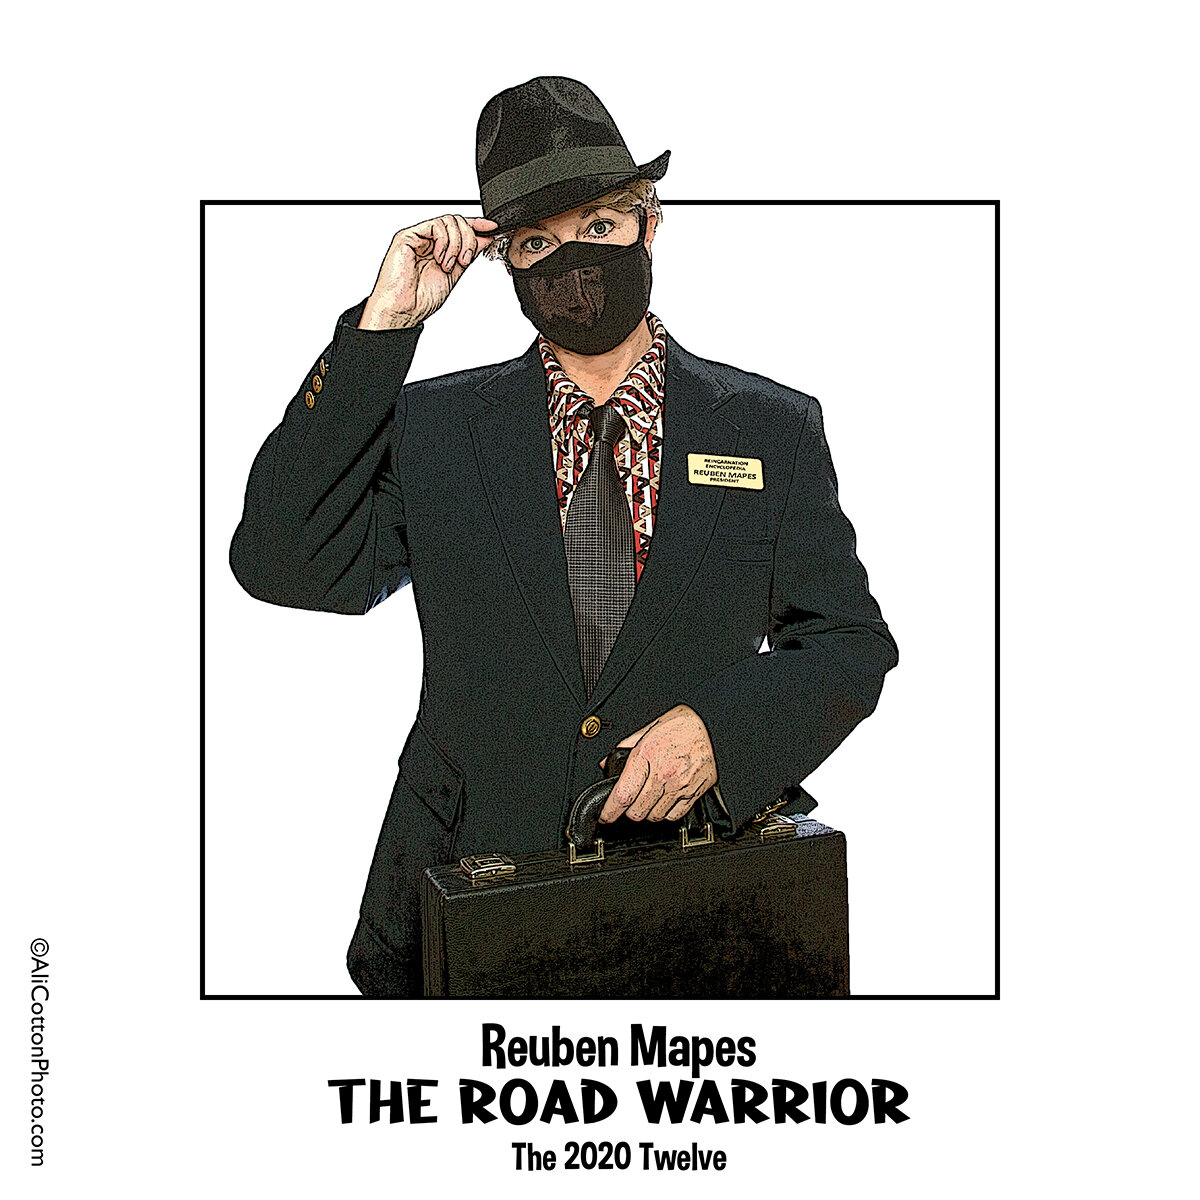 Reuben Mapes  AKA  The Road Warrior